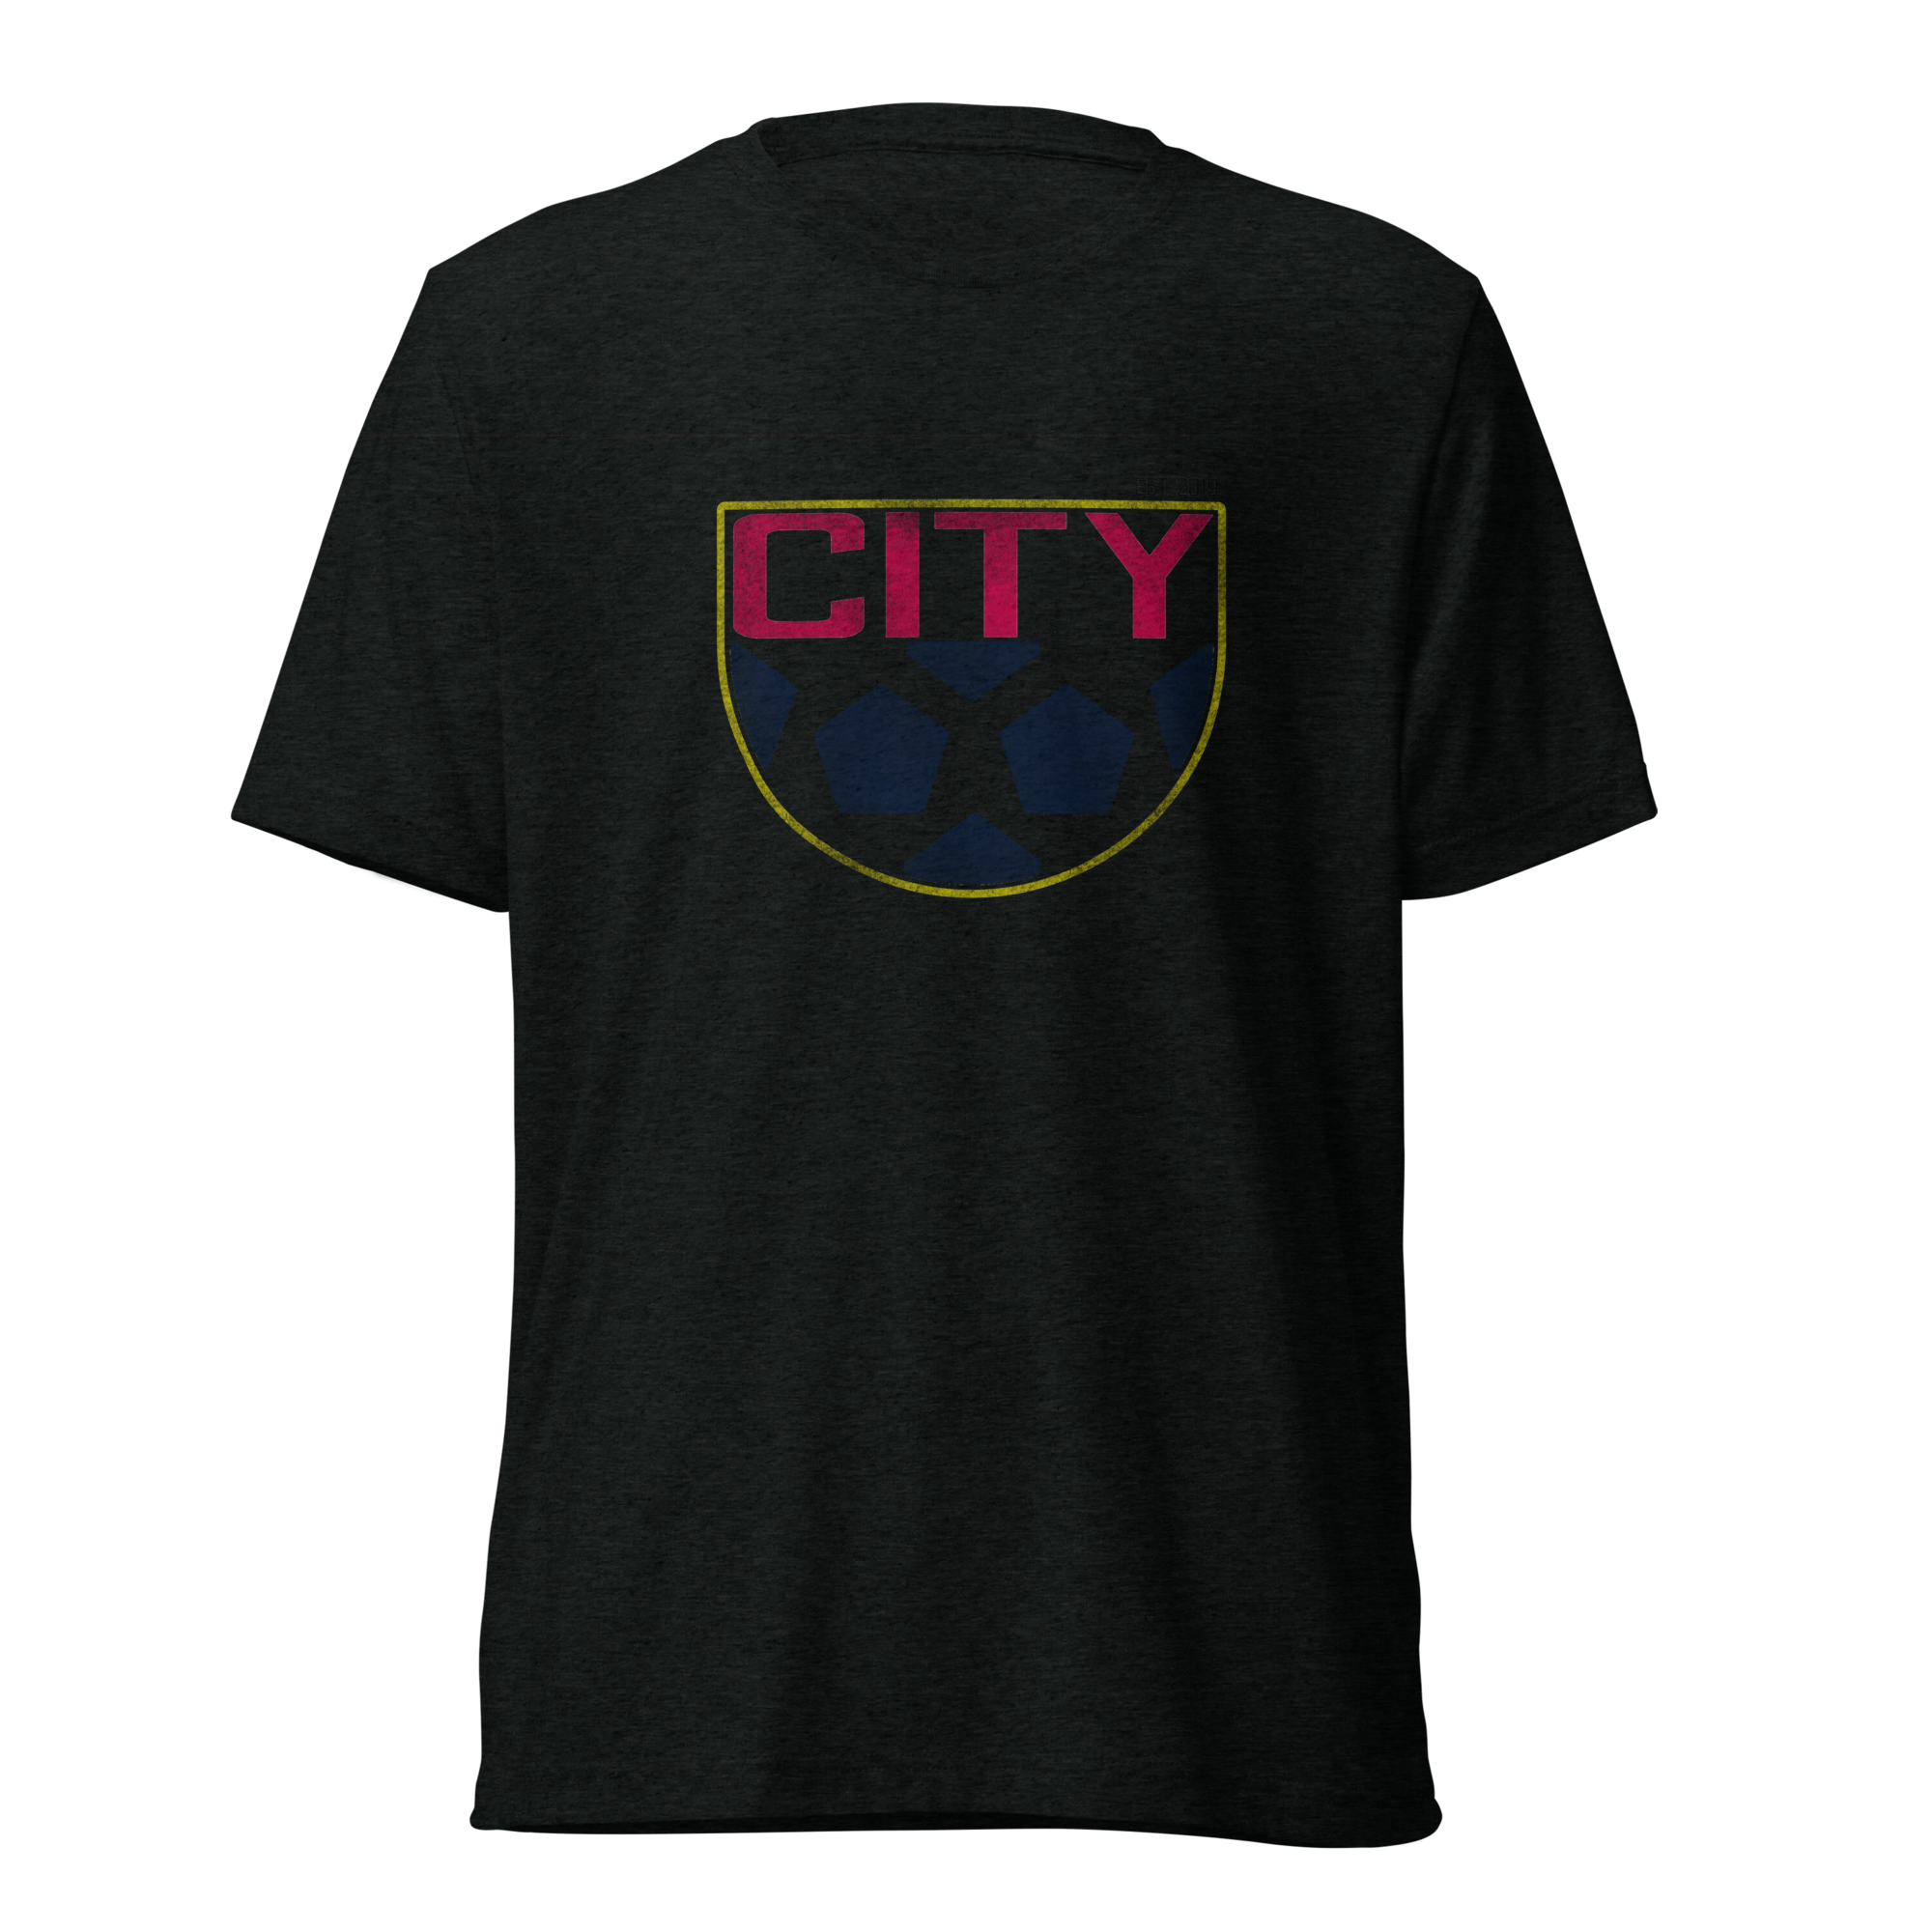 CITY t-shirt